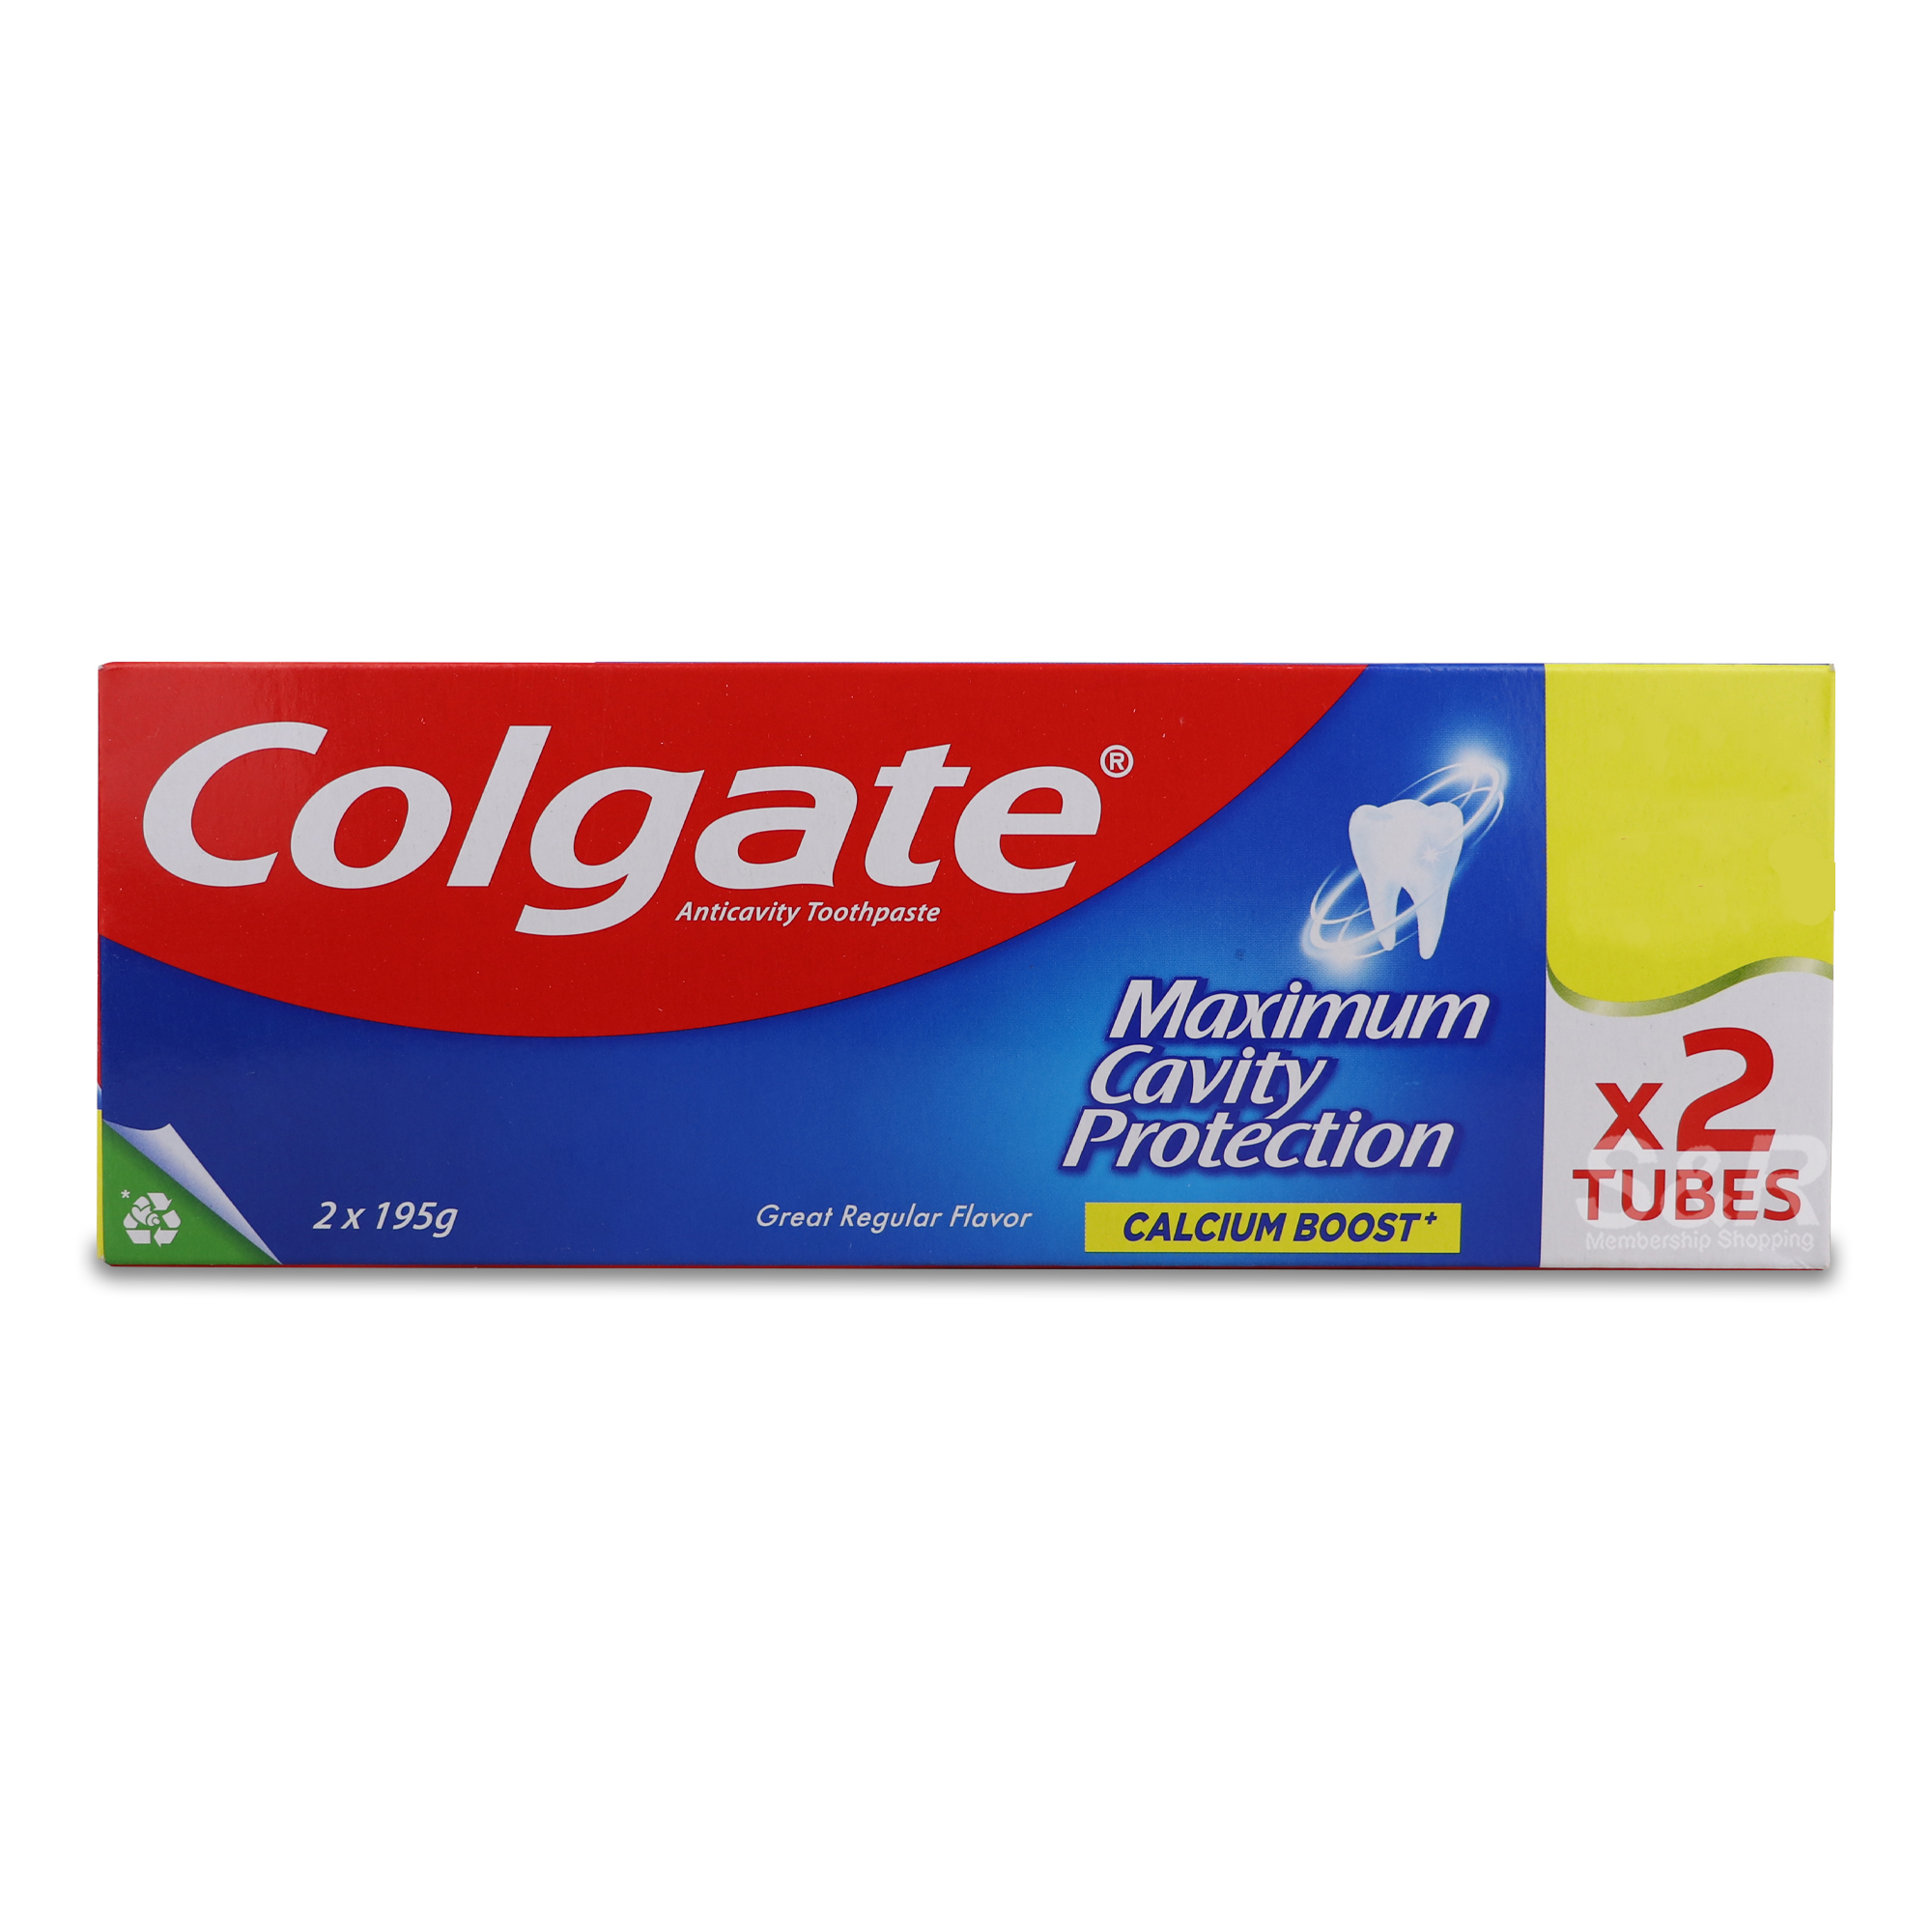 Colgate Toothpaste Great Regular Flavor 2x195g